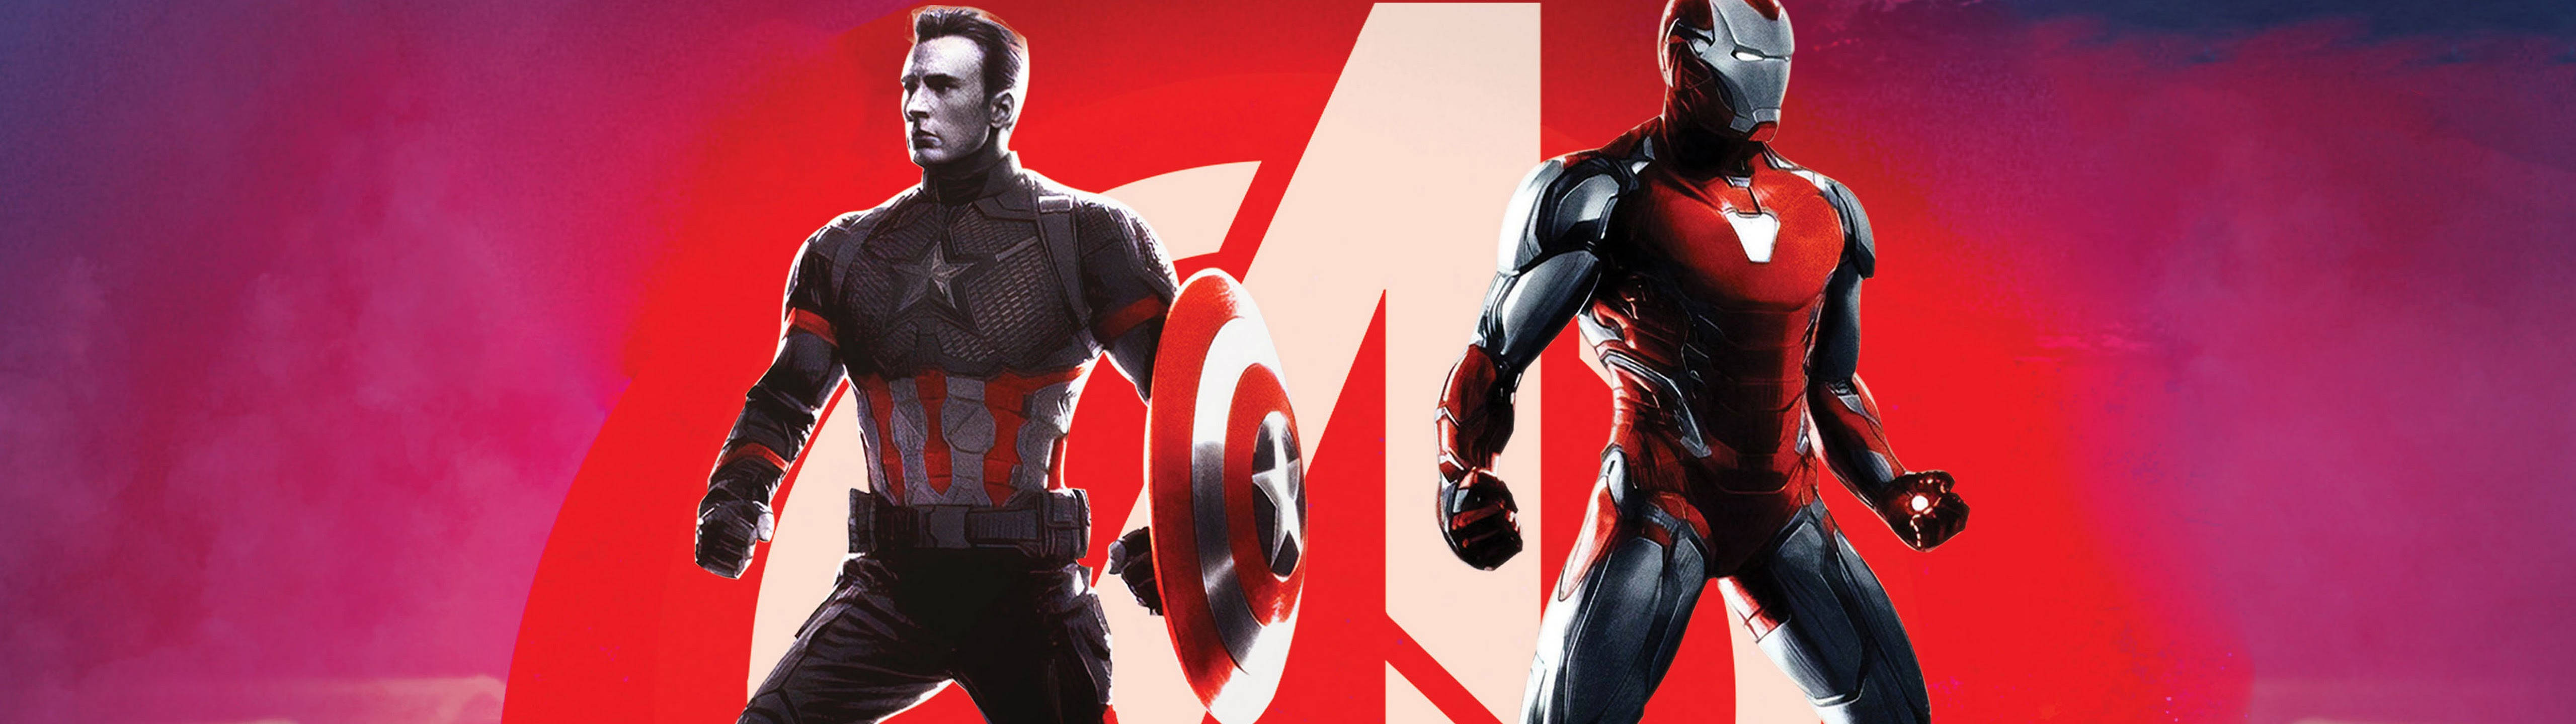 Marvel The Civil War 5120 X 1440 Wallpaper